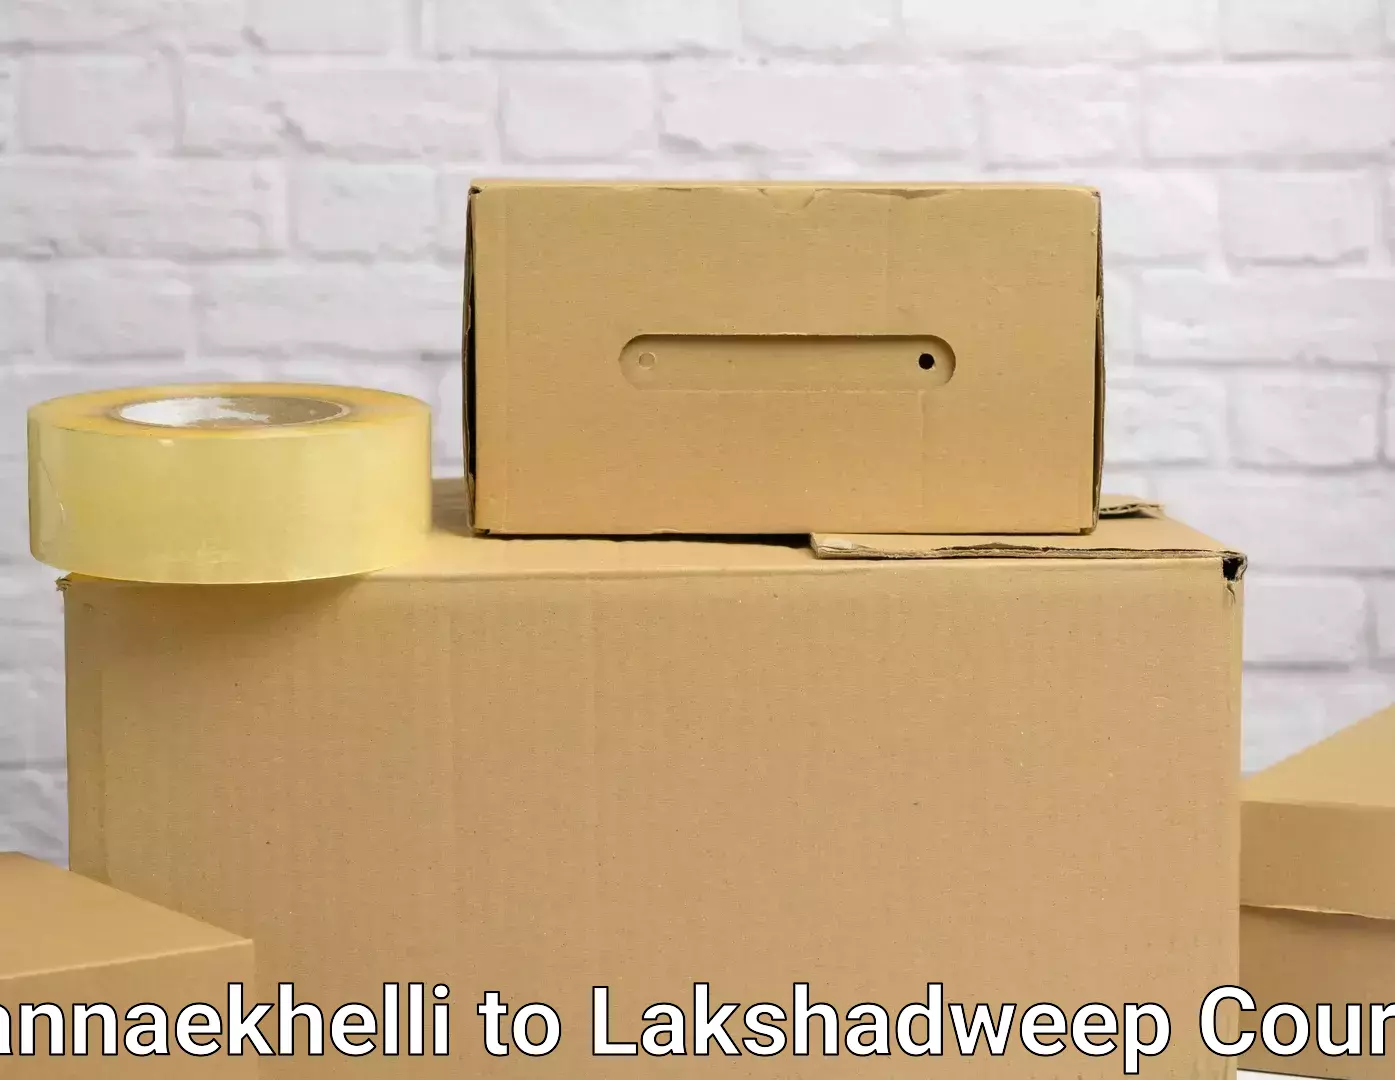 Moving and packing experts Mannaekhelli to Lakshadweep